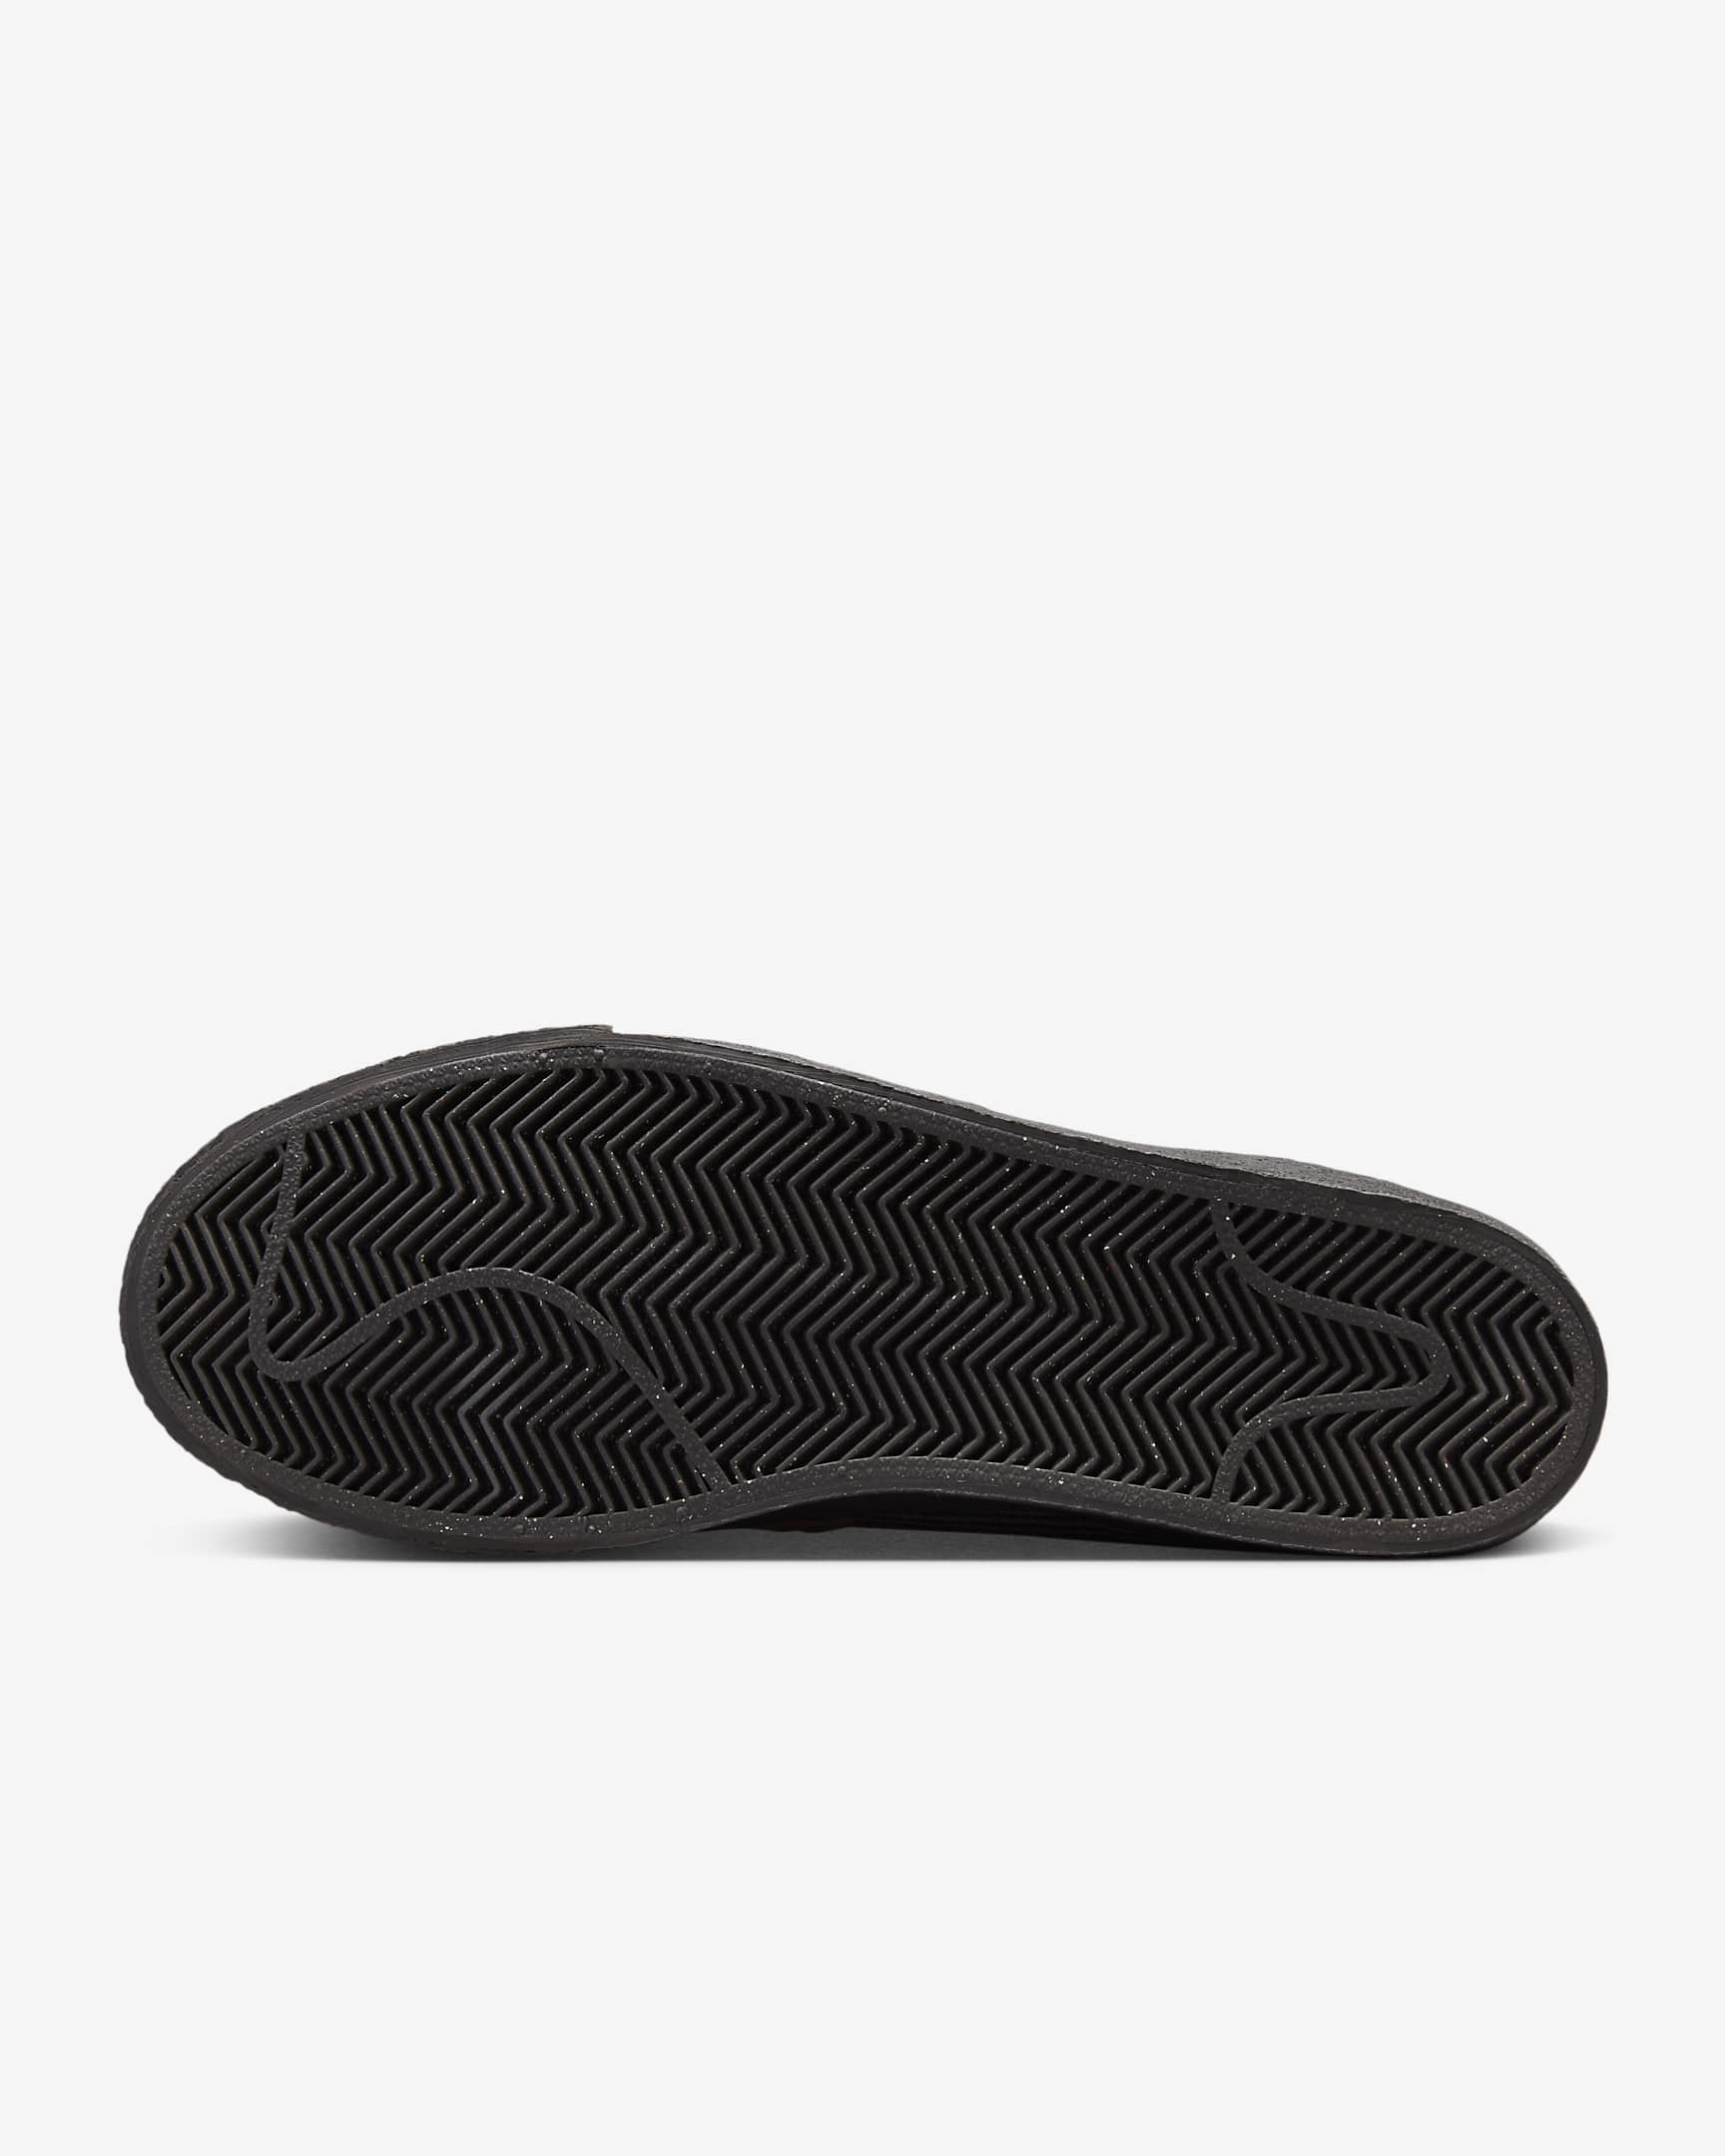 Nike SB Zoom Blazer Mid Premium Skate Shoes - Legend Dark Brown/Obsidian/Light British Tan/Fir